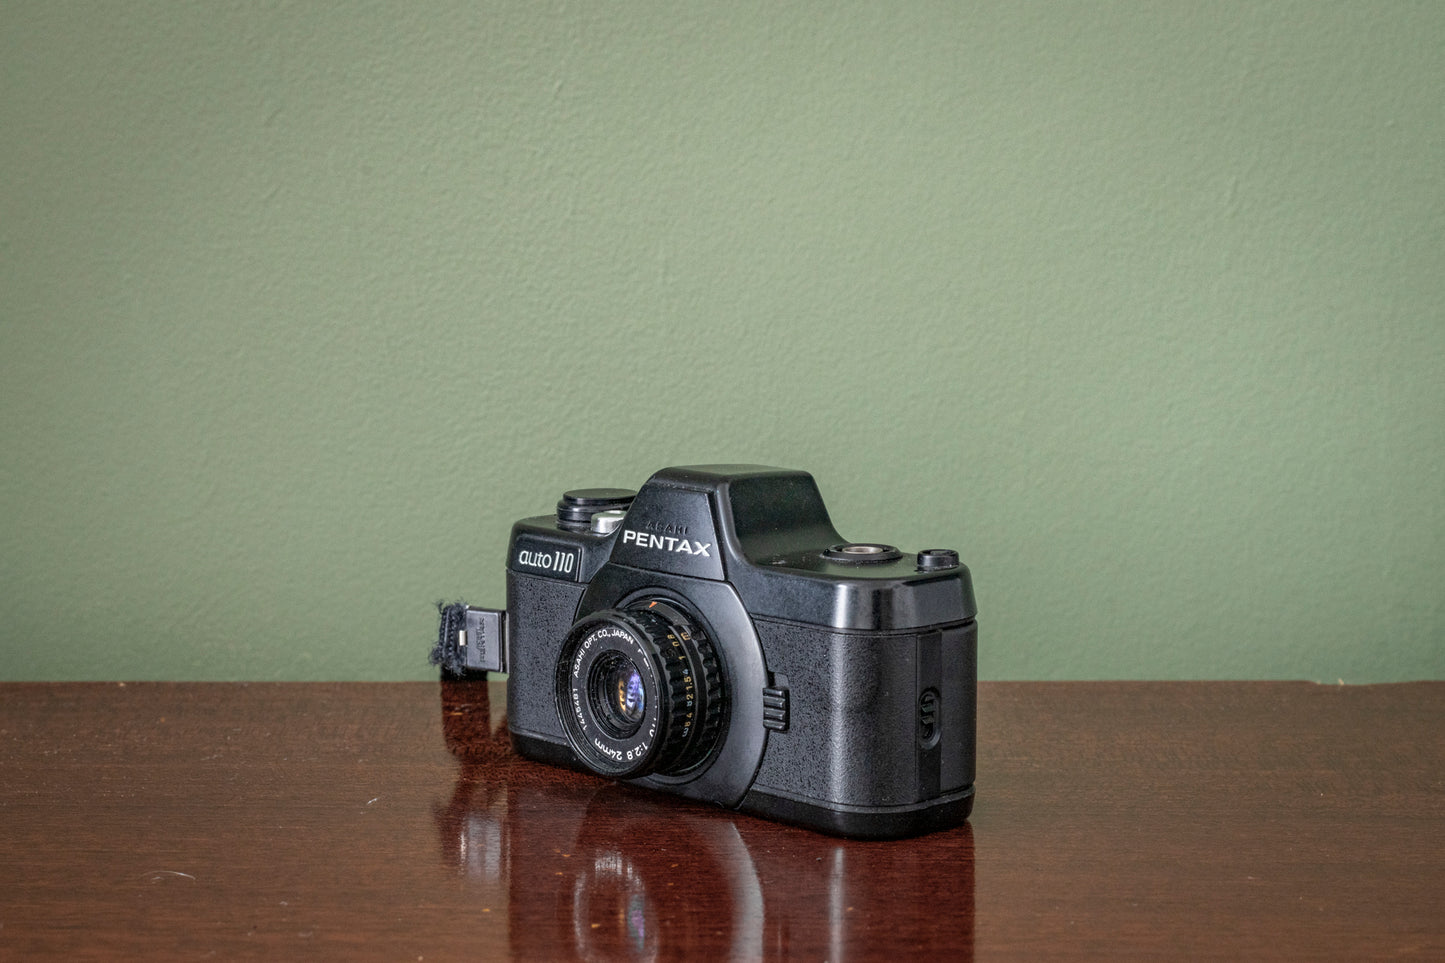 Pentax Auto 110mm Film Camera with Pentax 24mm F2.8 Lens